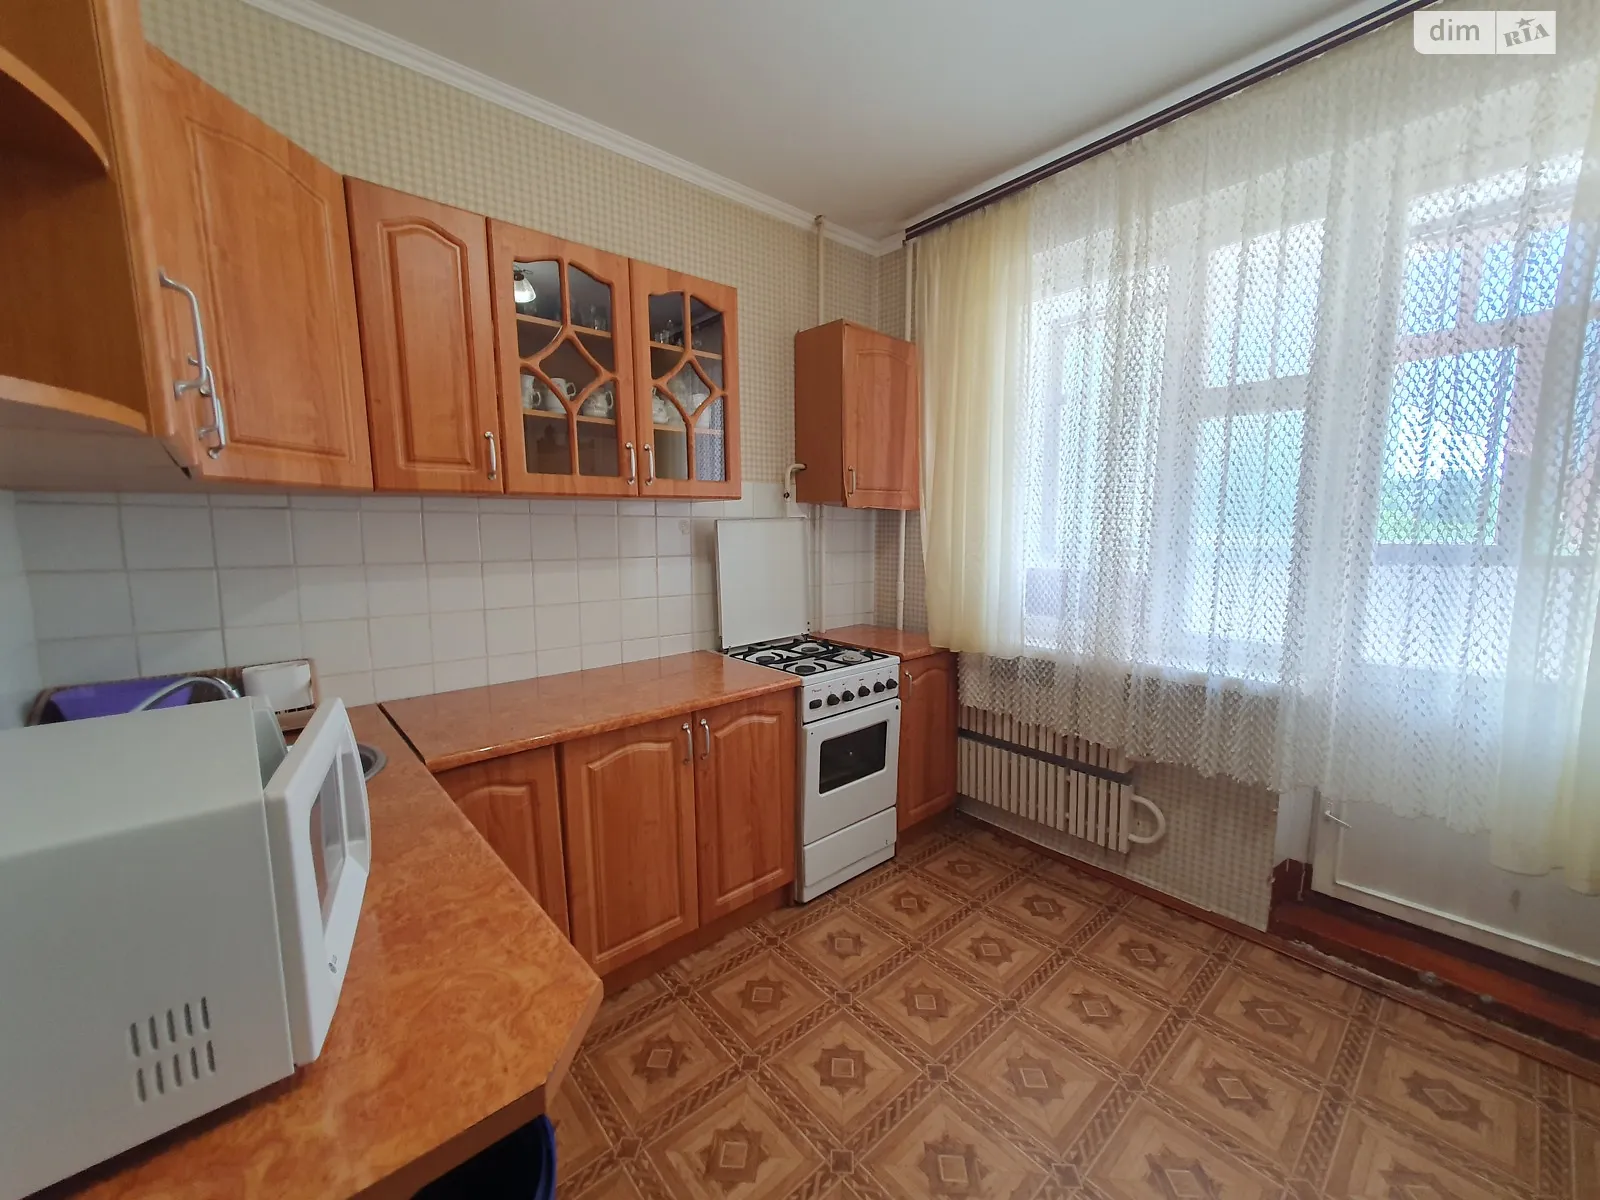 Продається 1-кімнатна квартира 40 кв. м у Хмельницькому, вул. Панаса Мирного - фото 1